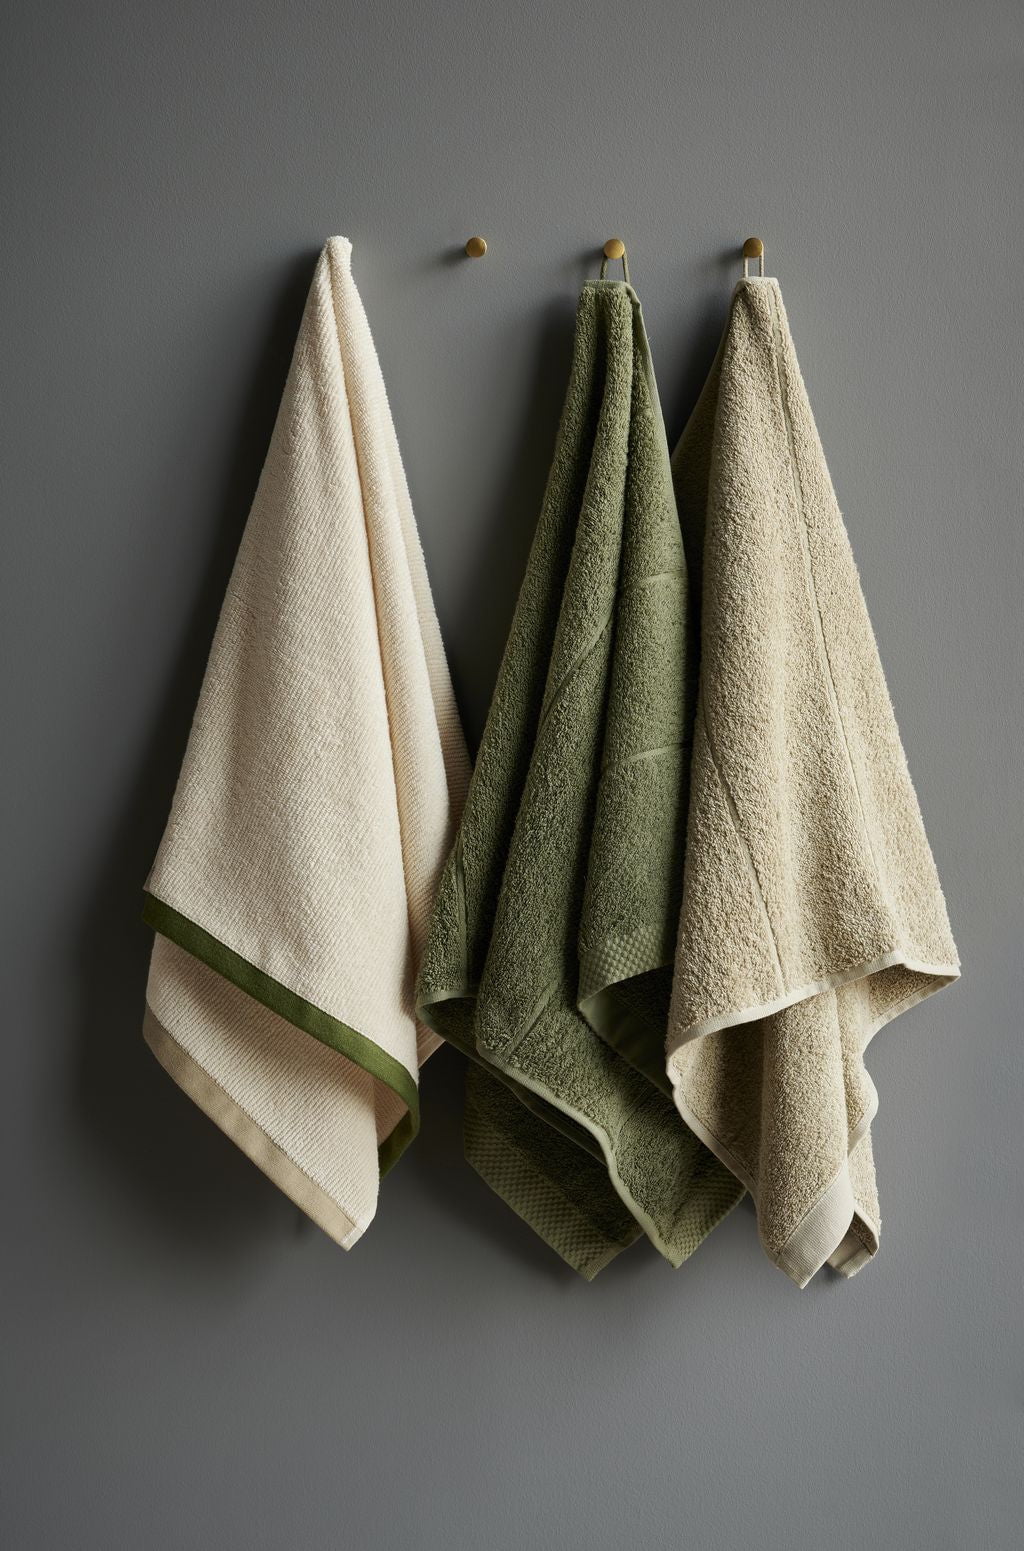 Södahl Line Towel 50x100, Eucalyptus